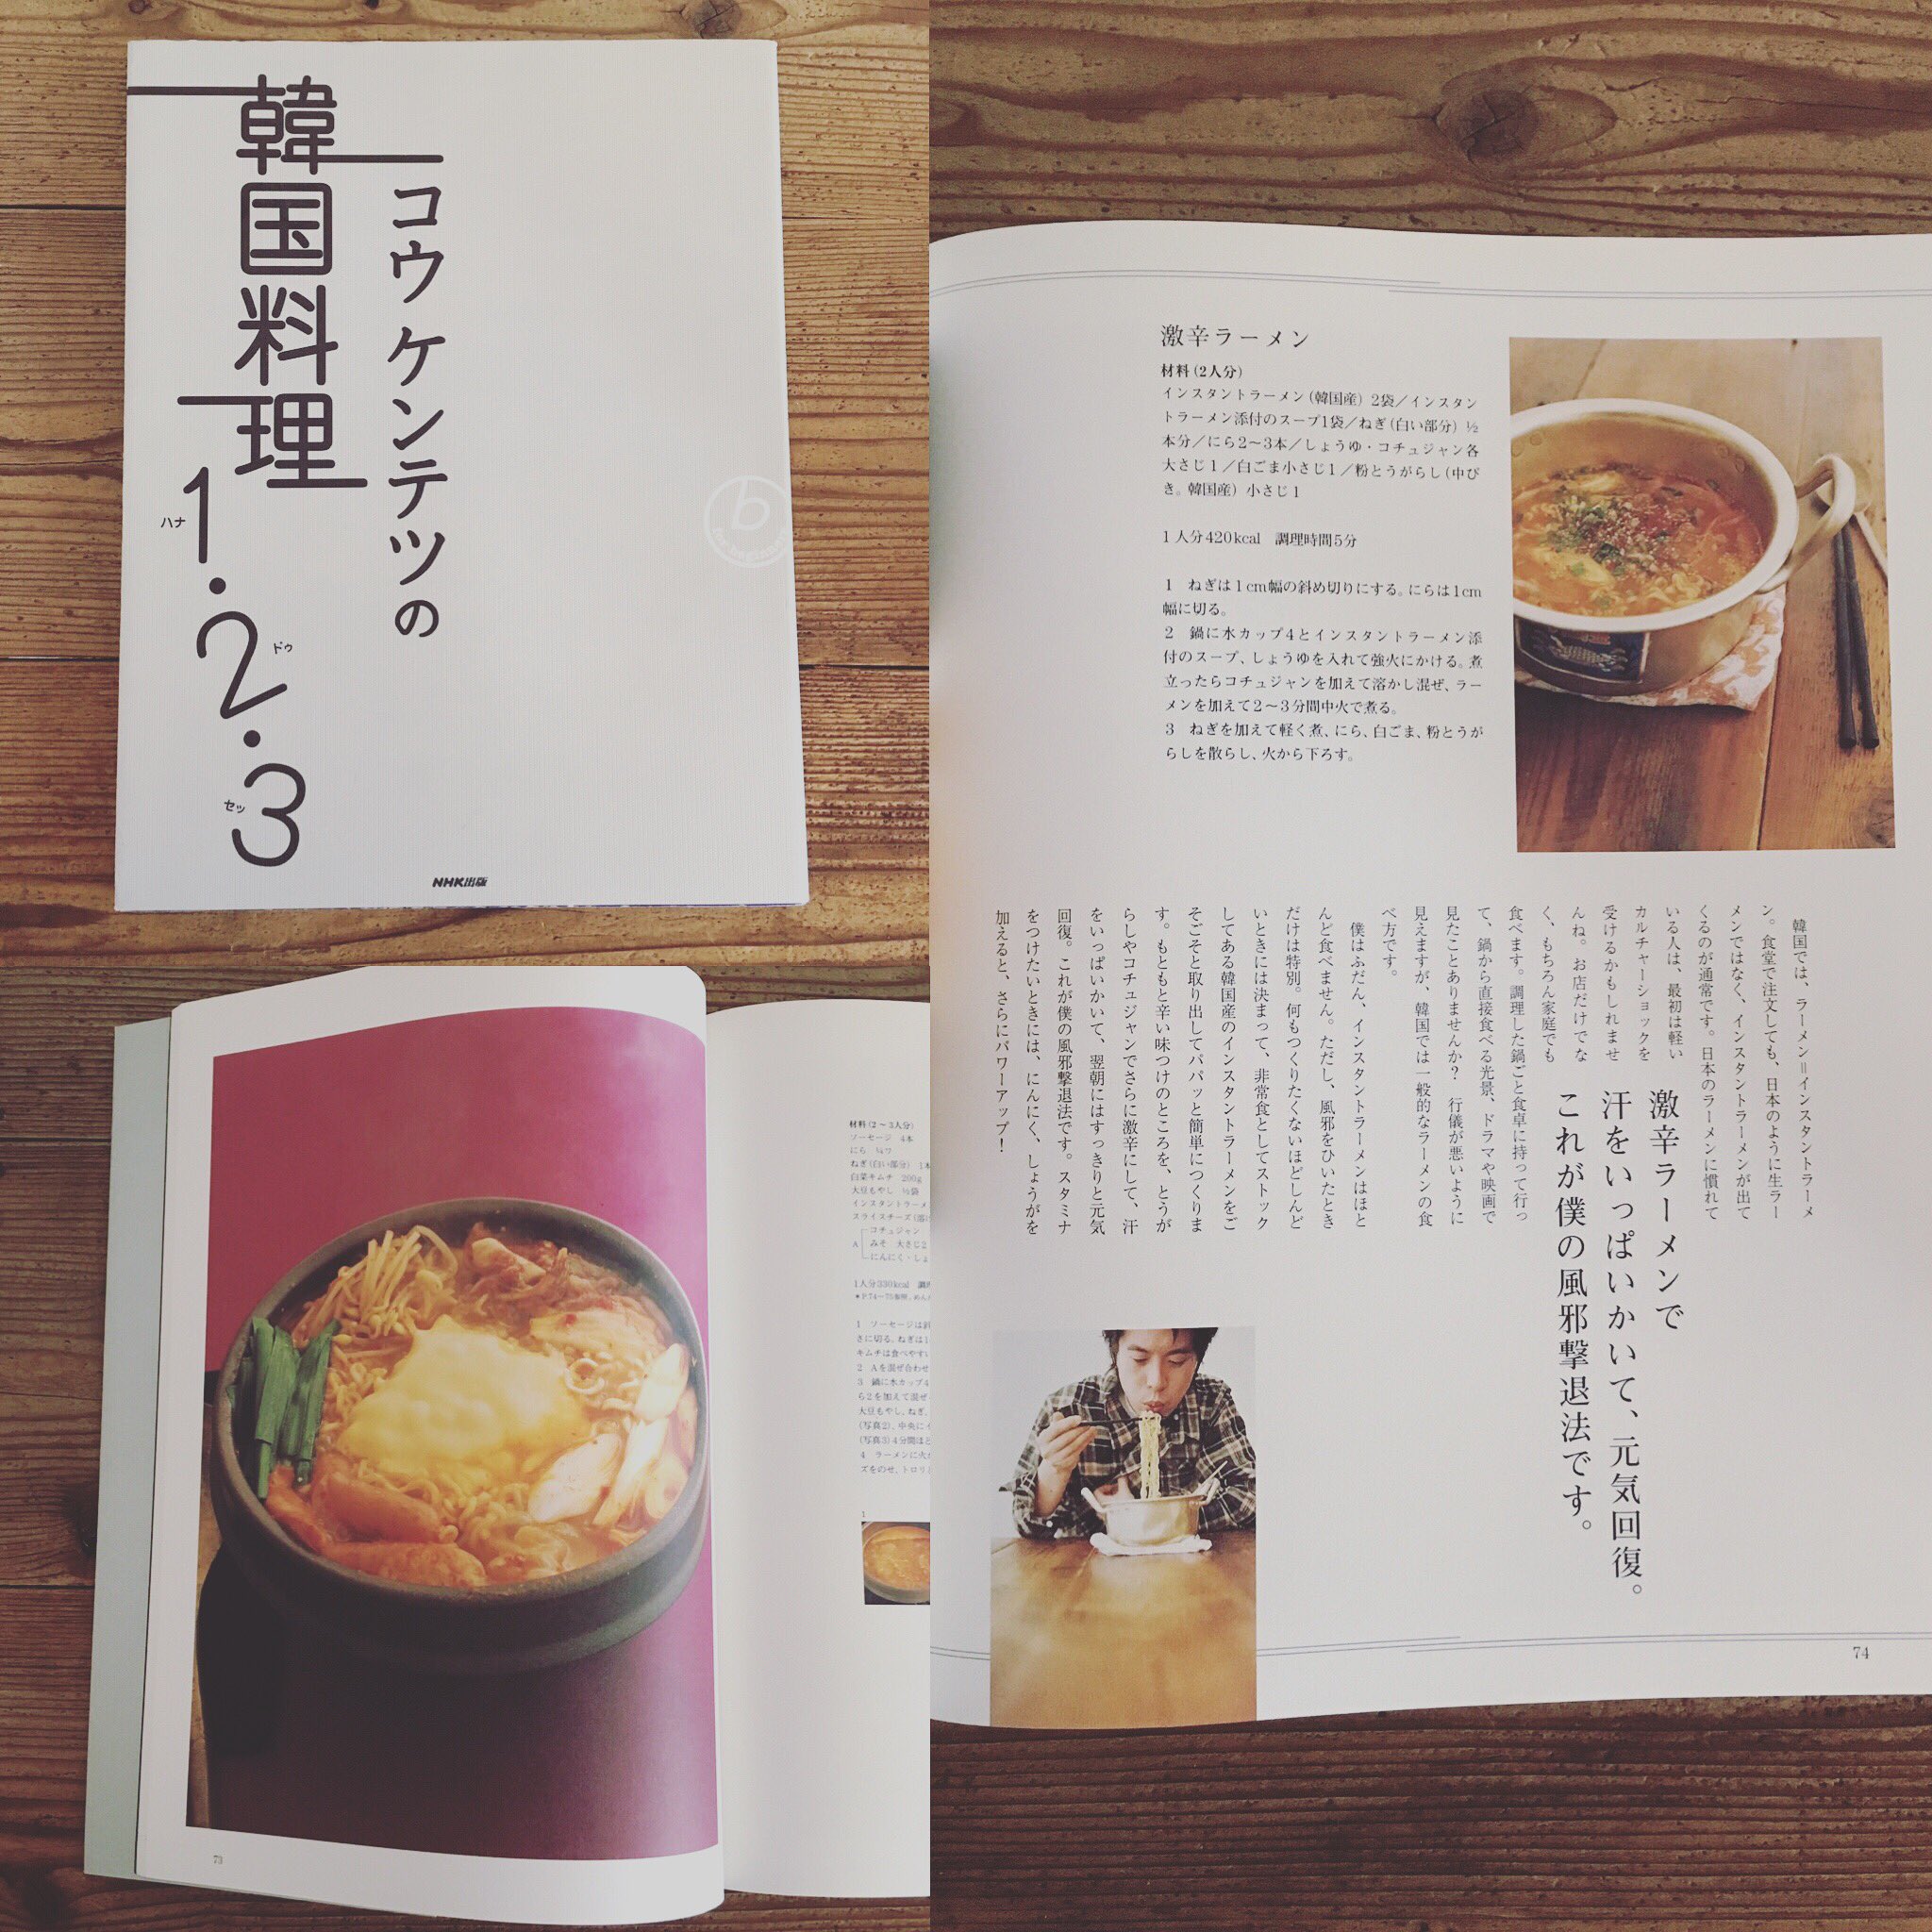 Ao Yoru Sora コウケンテツの韓国料理 1 2 3 コウケンテツ著 Nhk出版発行 この本で一番気になったのは風邪を引いた時に食べるという韓国 のインスタントラーメンに さらに唐辛子とコチジャンを入れる激辛ラーメン 韓国のインスタントラーメンは